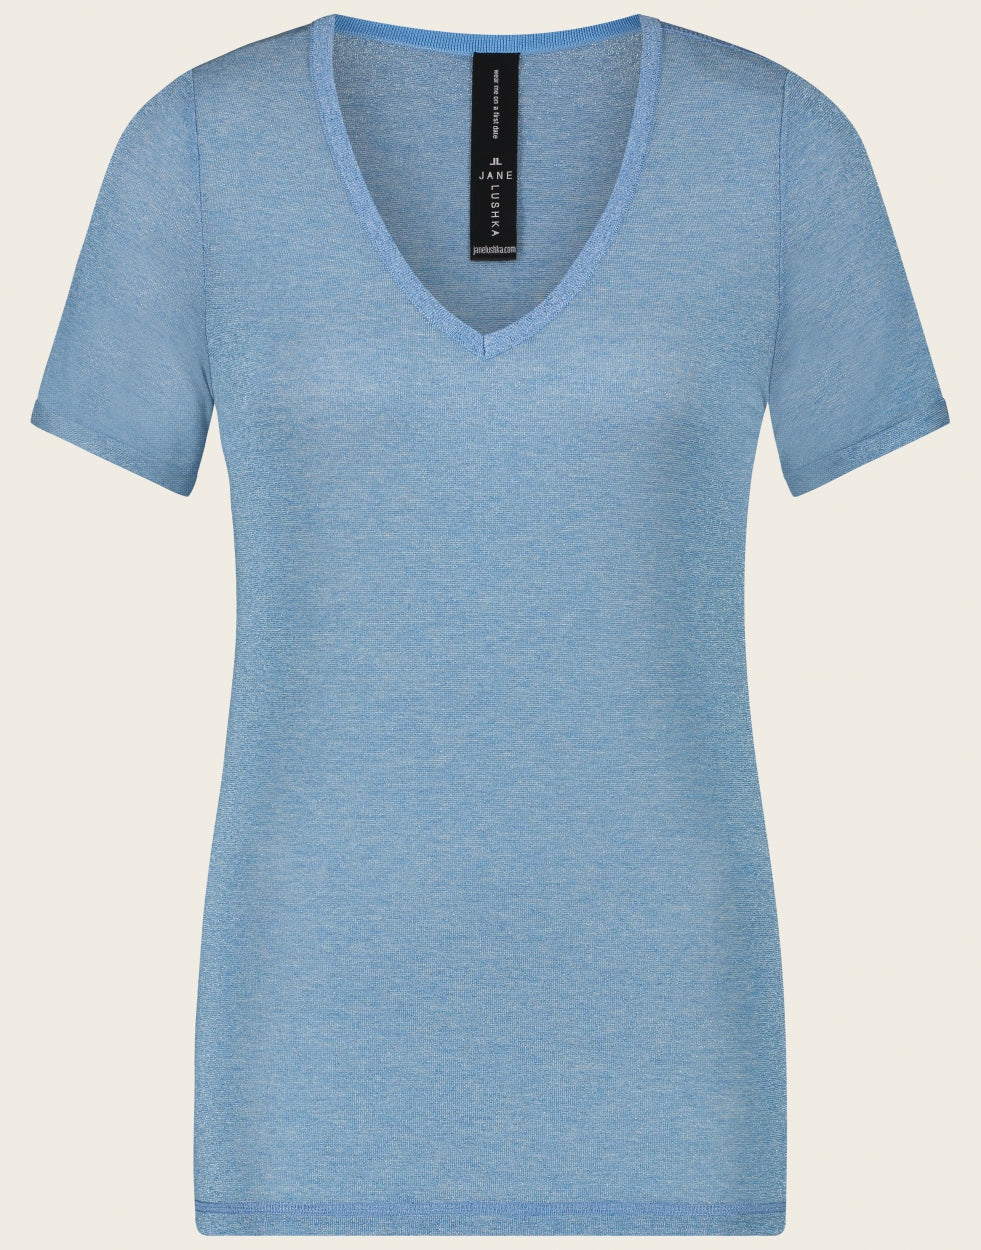 T shirt Leny | Blue ocean